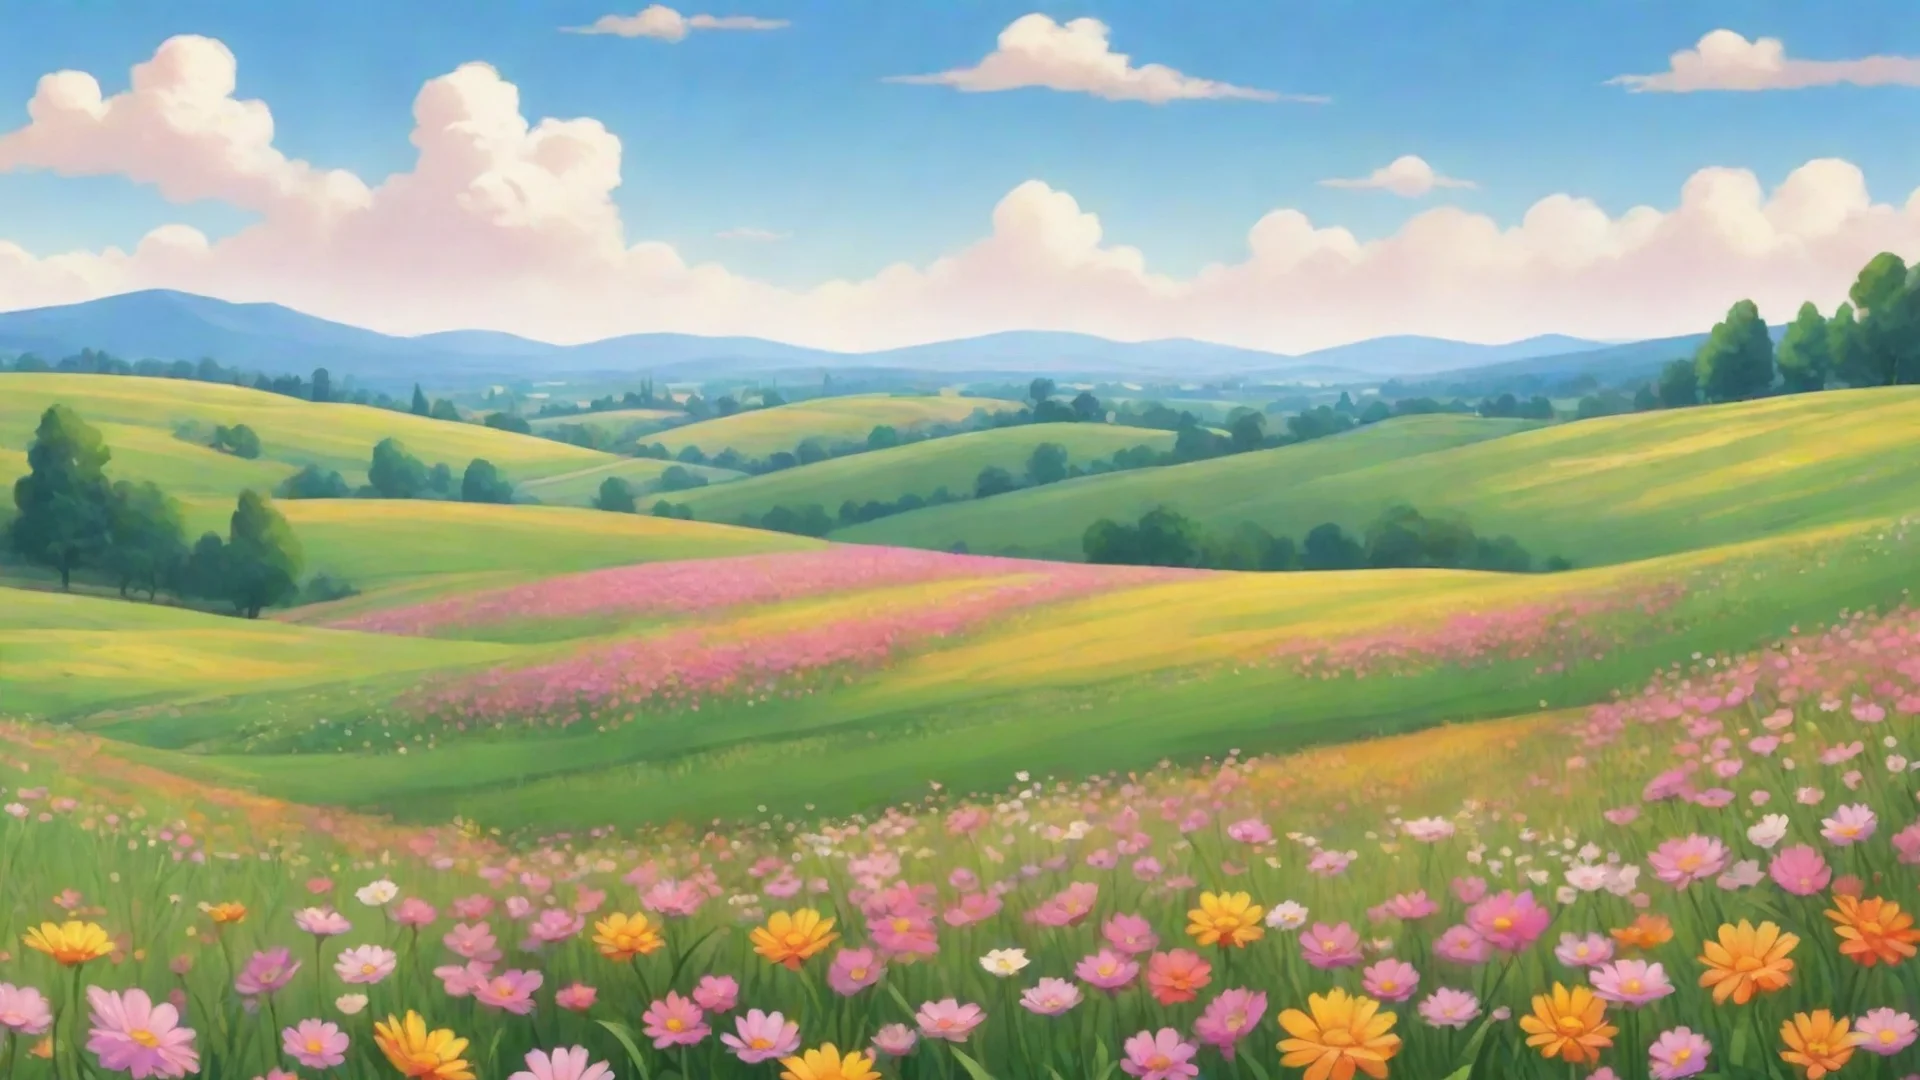 background sweeping landscape fields of flowers peaceful relaxing cartoon realisism hd wide